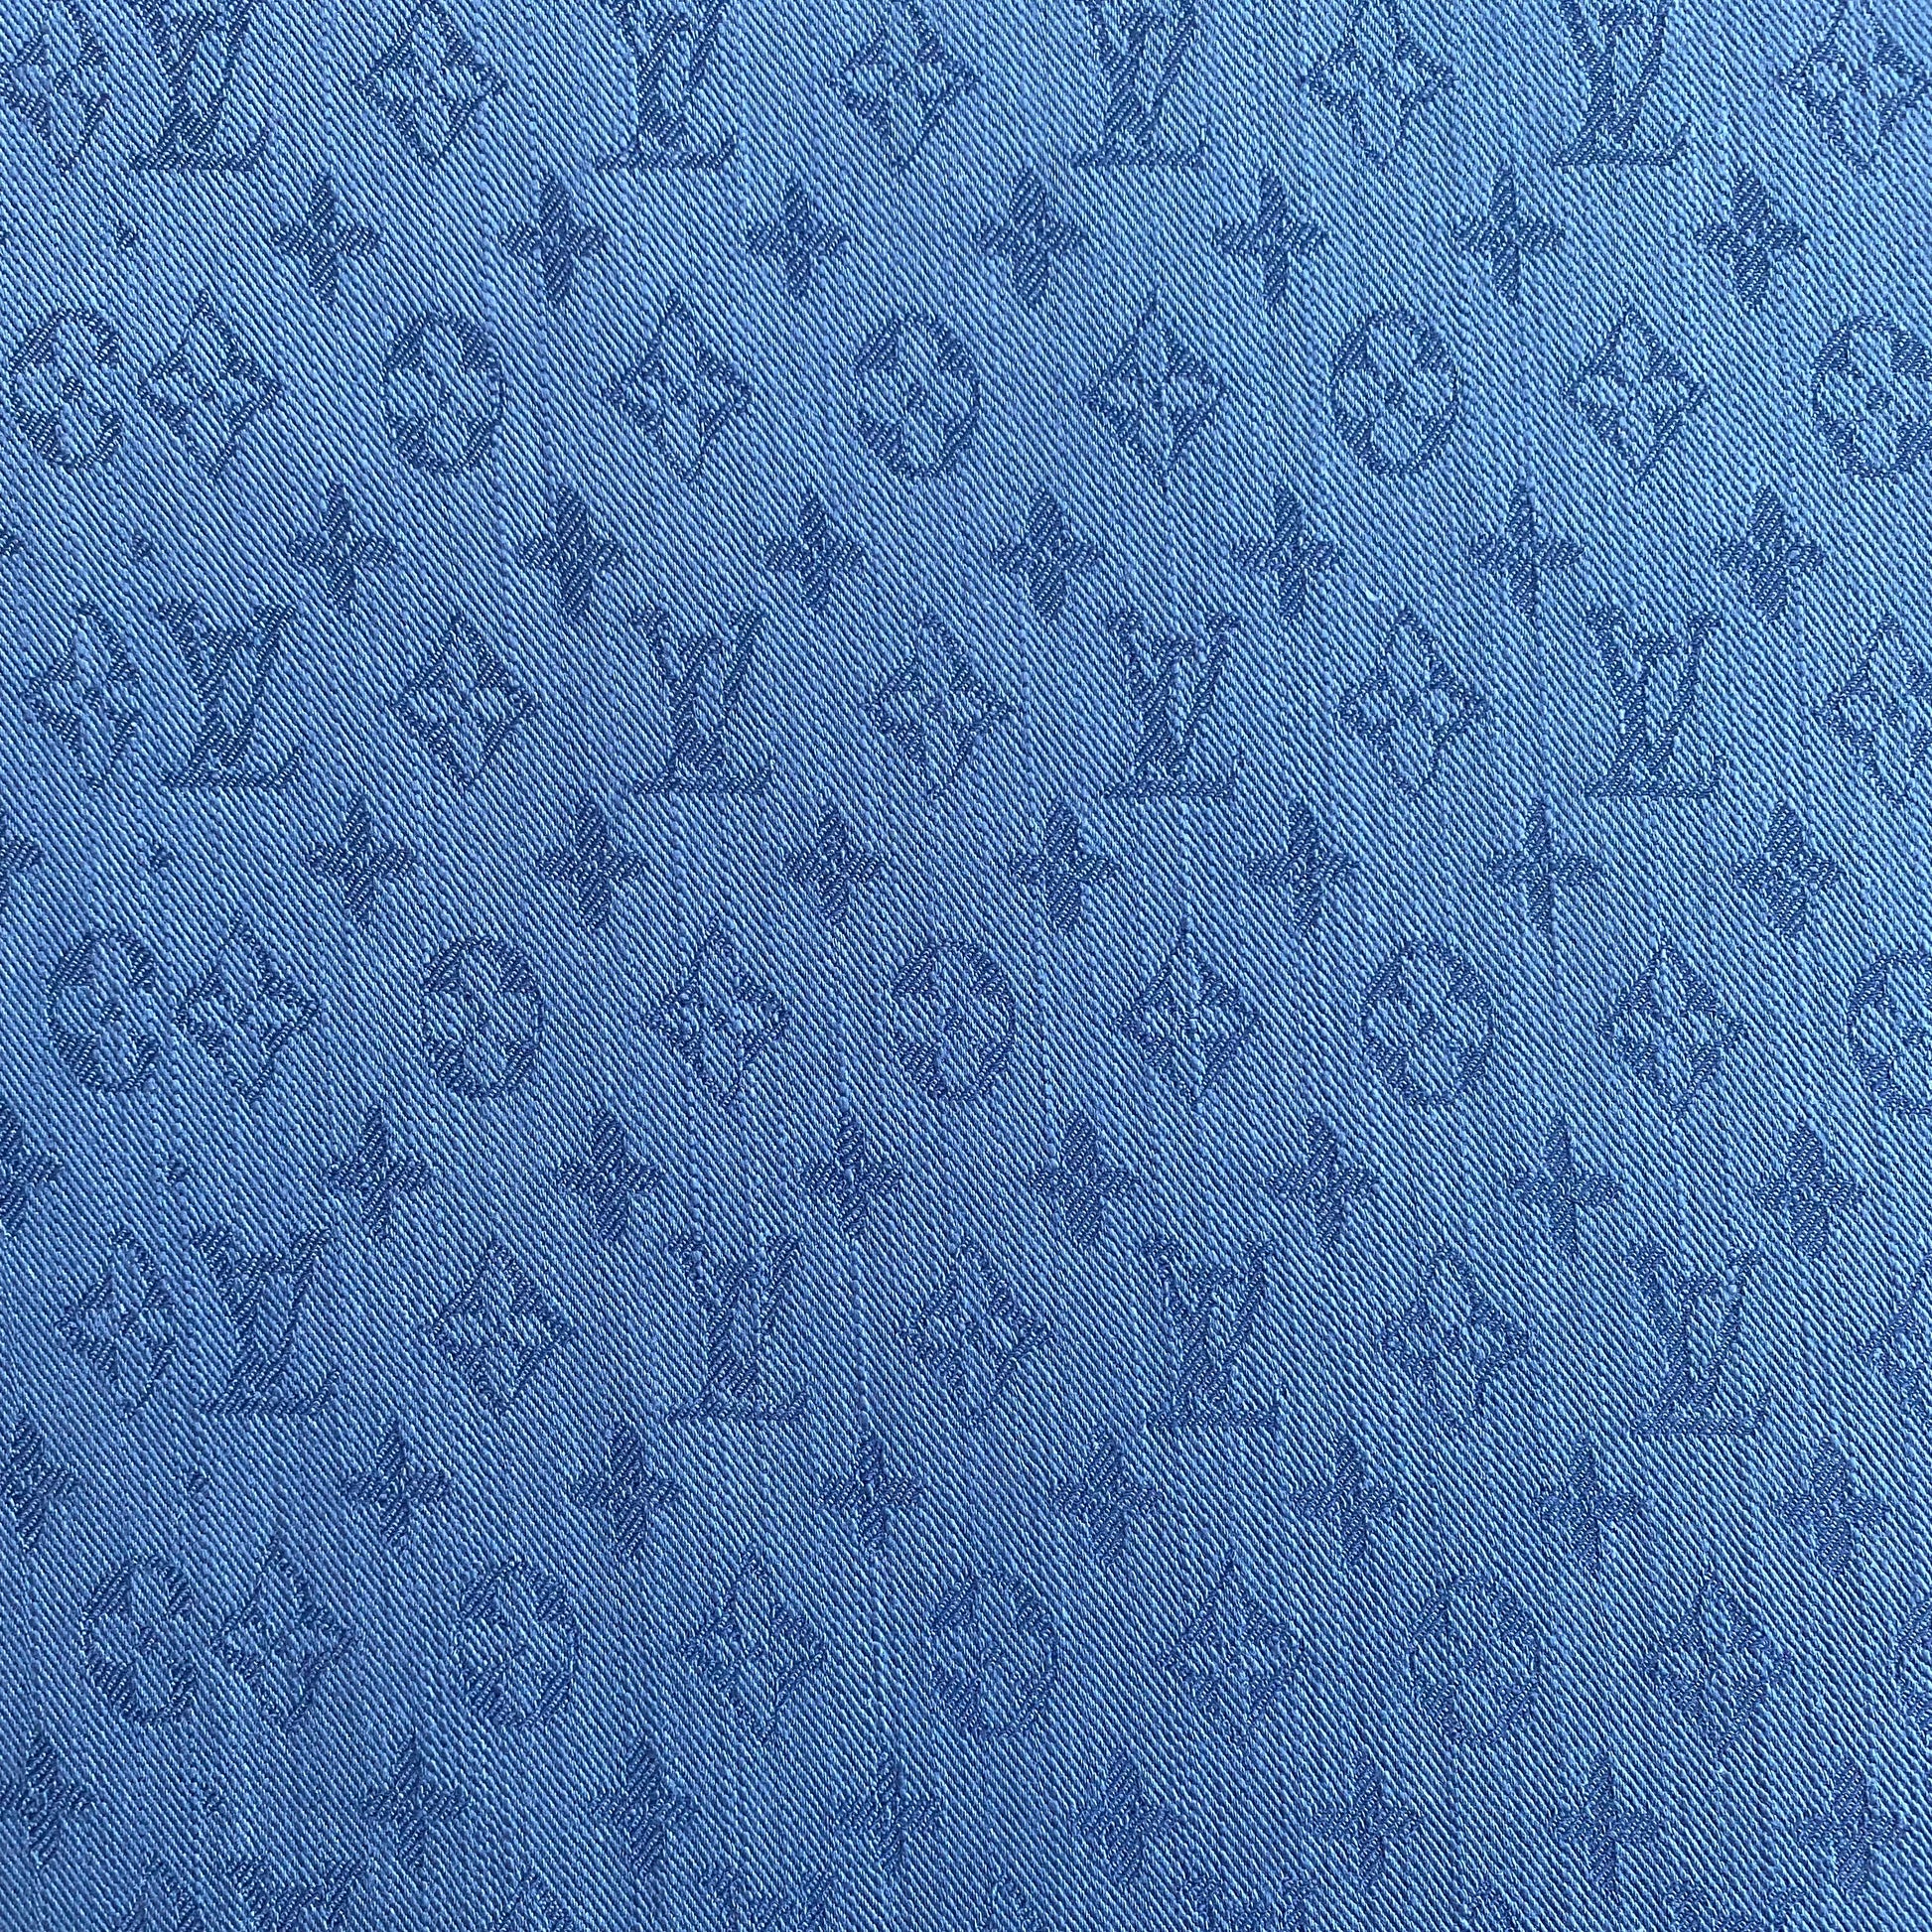 Louis Vuitton on X: A distinctive pattern. For #LVFW20, an exclusive blue  denim color enriches the signature SINCE 1854 jacquard collection. Discover  #NicolasGhesquiere's current #LouisVuitton collection at